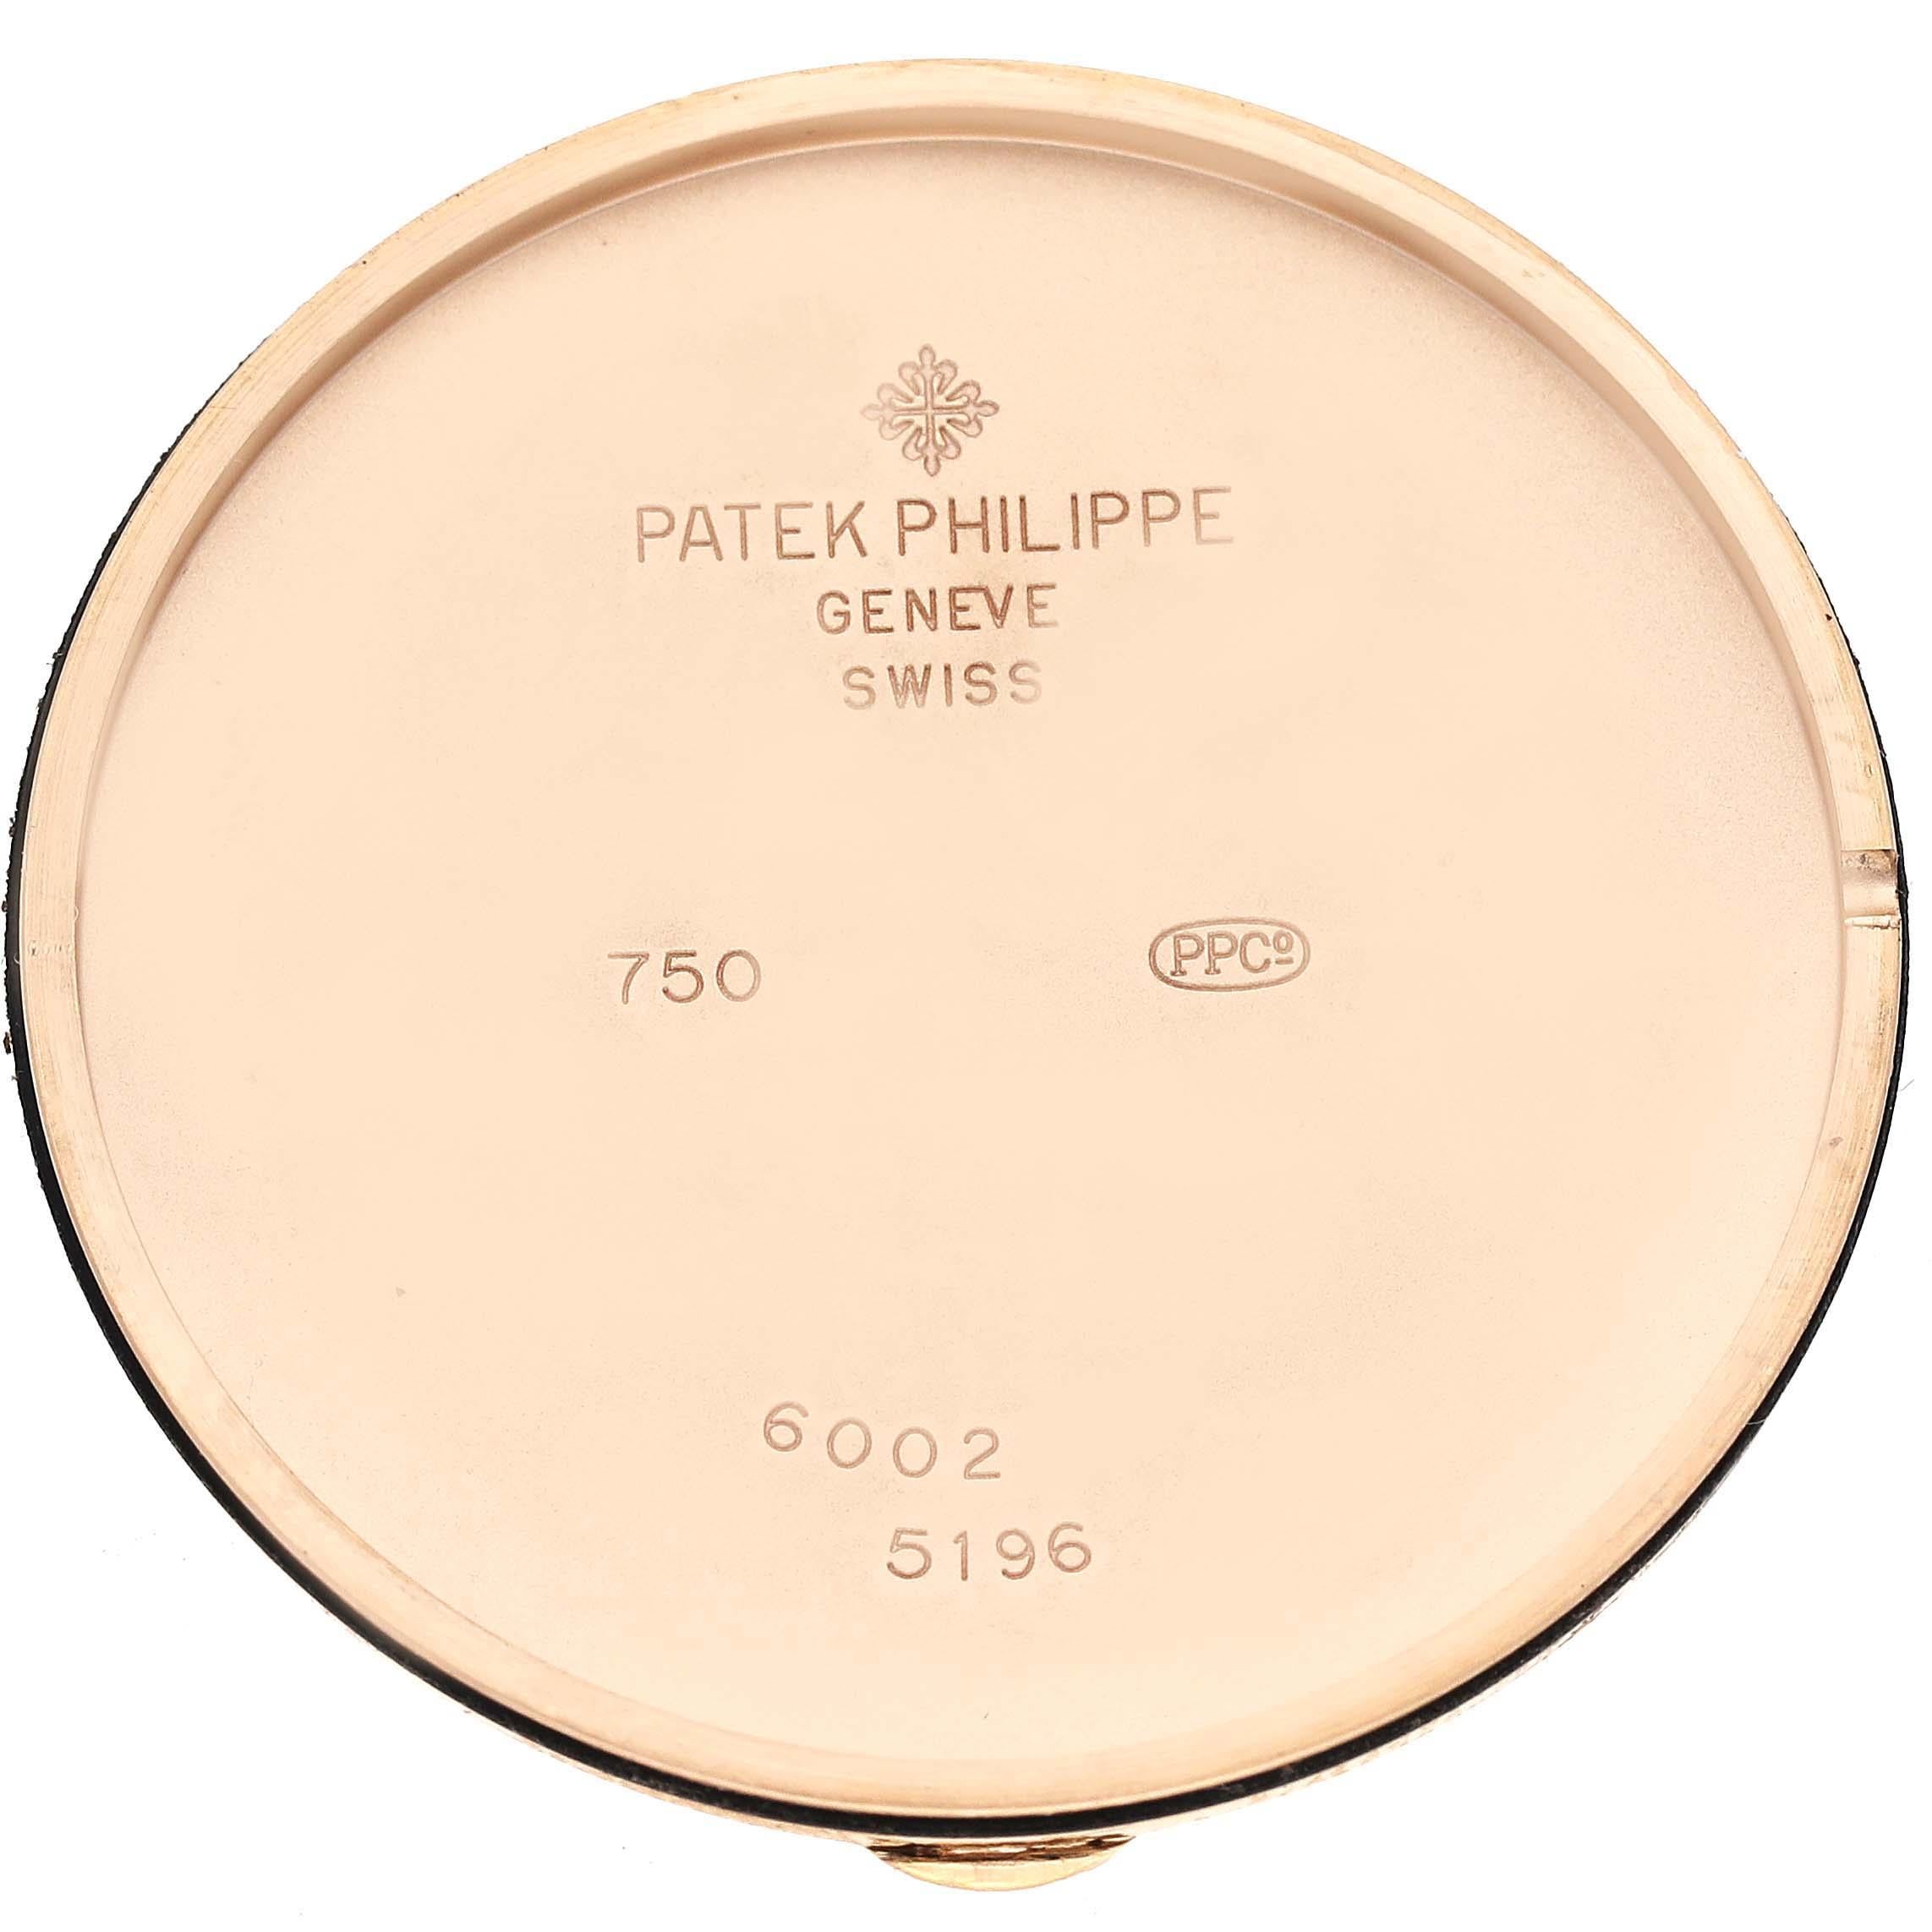 Patek Philippe Calatrava Rose Gold Silver Dial Mens Watch 5196 en vente 2